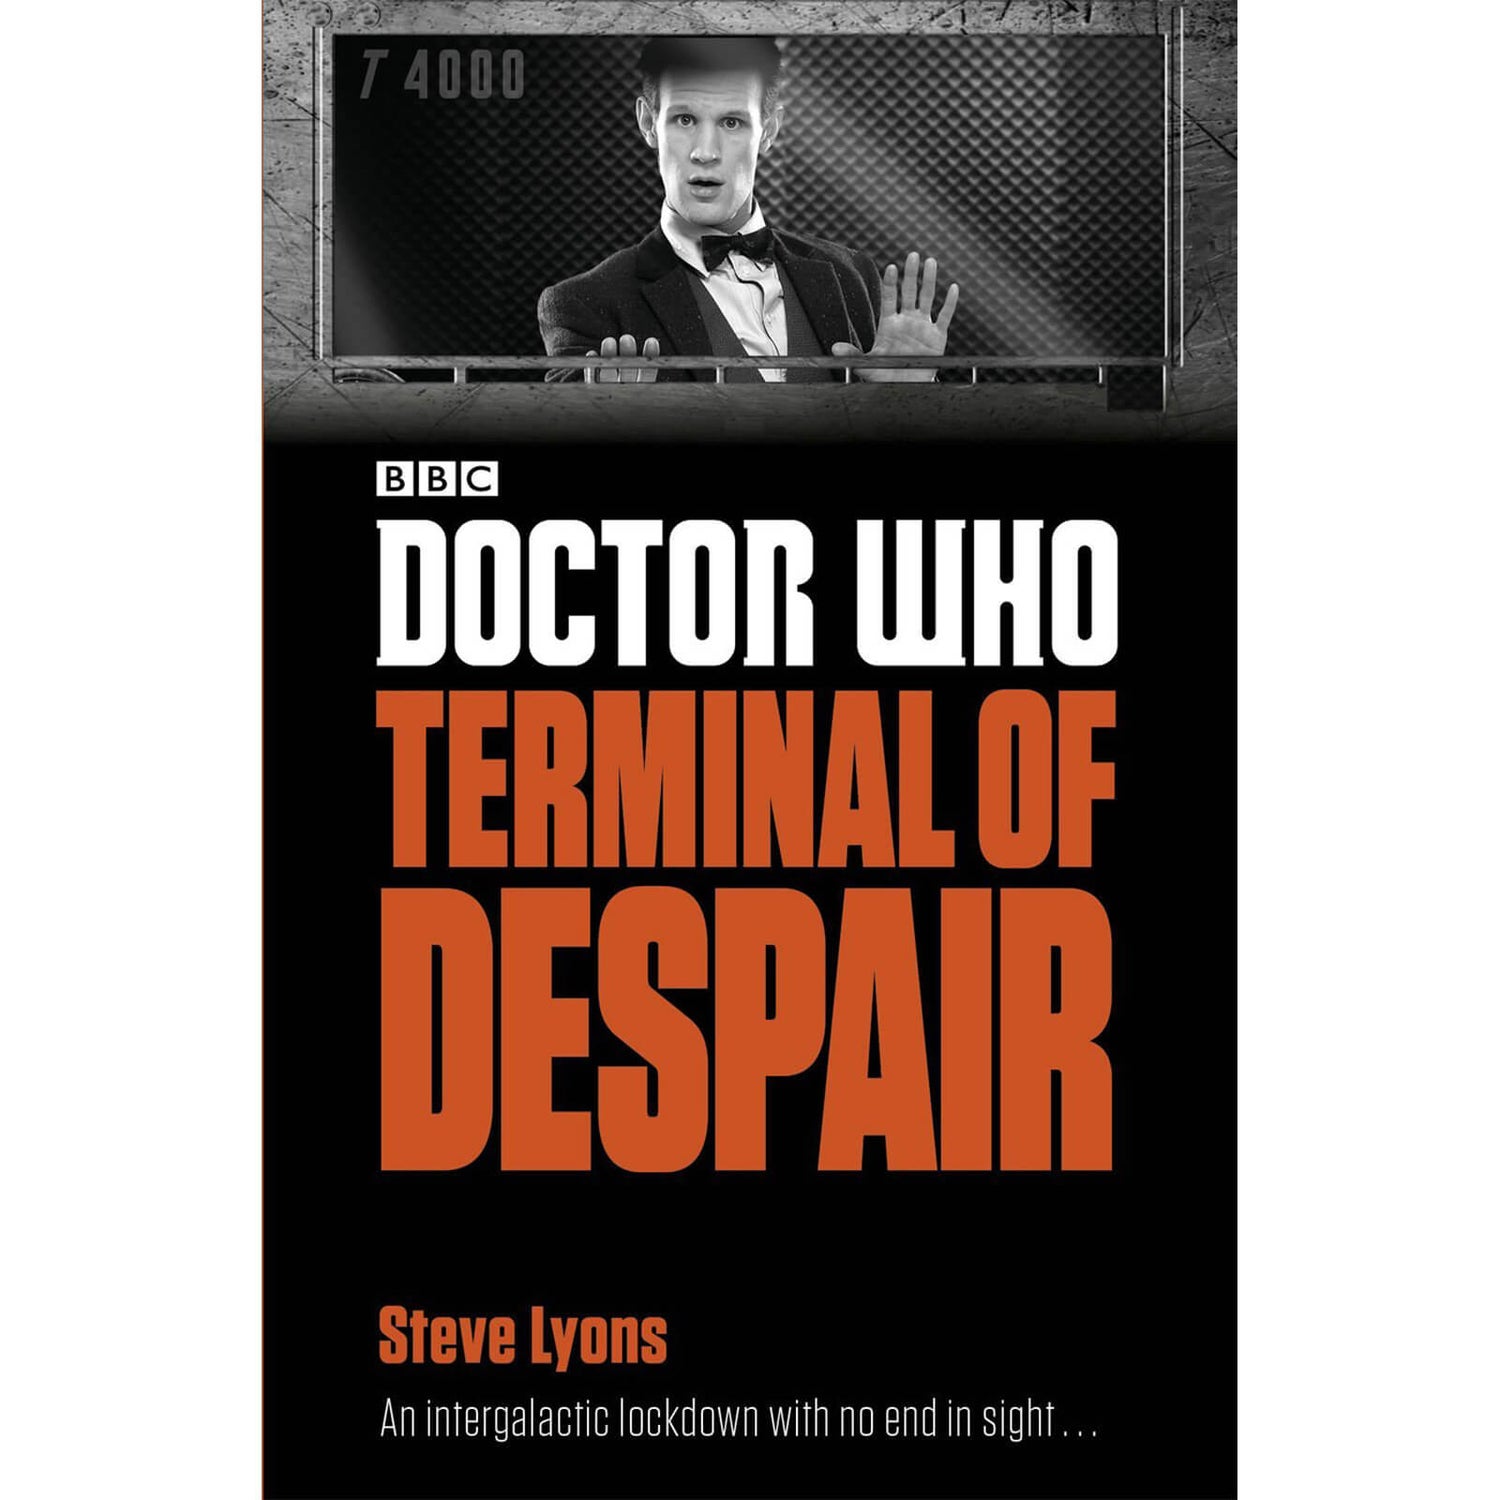 Doctor Who Terminal Of Despair Graphic Novel